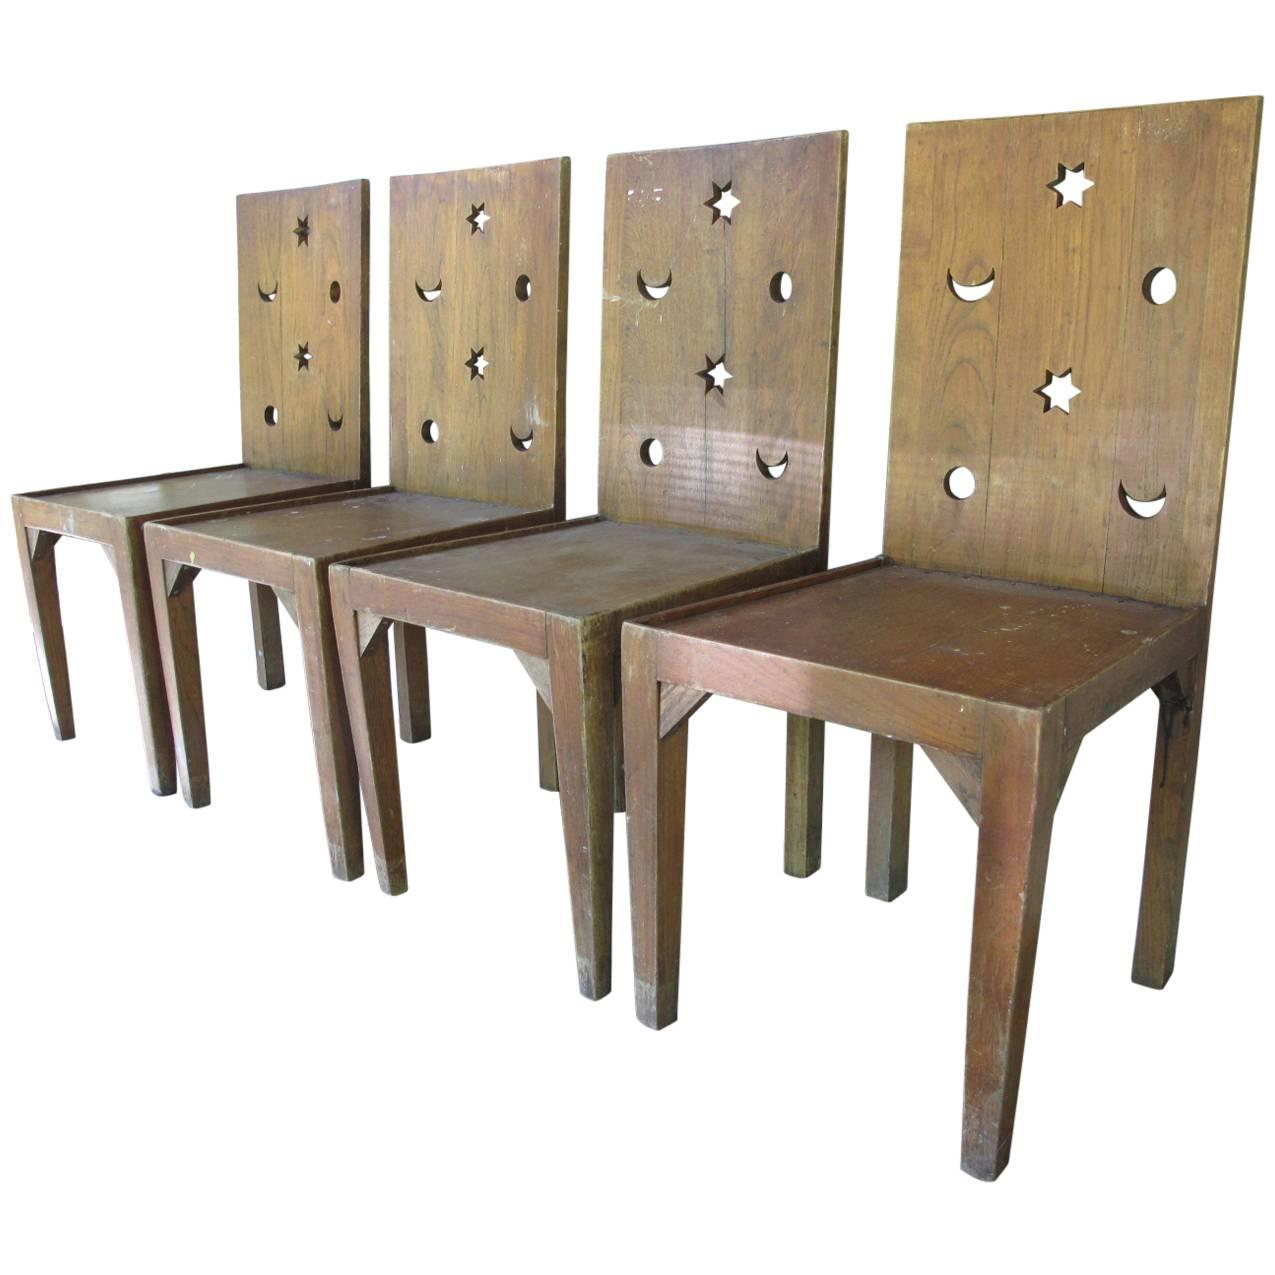 Folk Art Astrological Oak Chairs